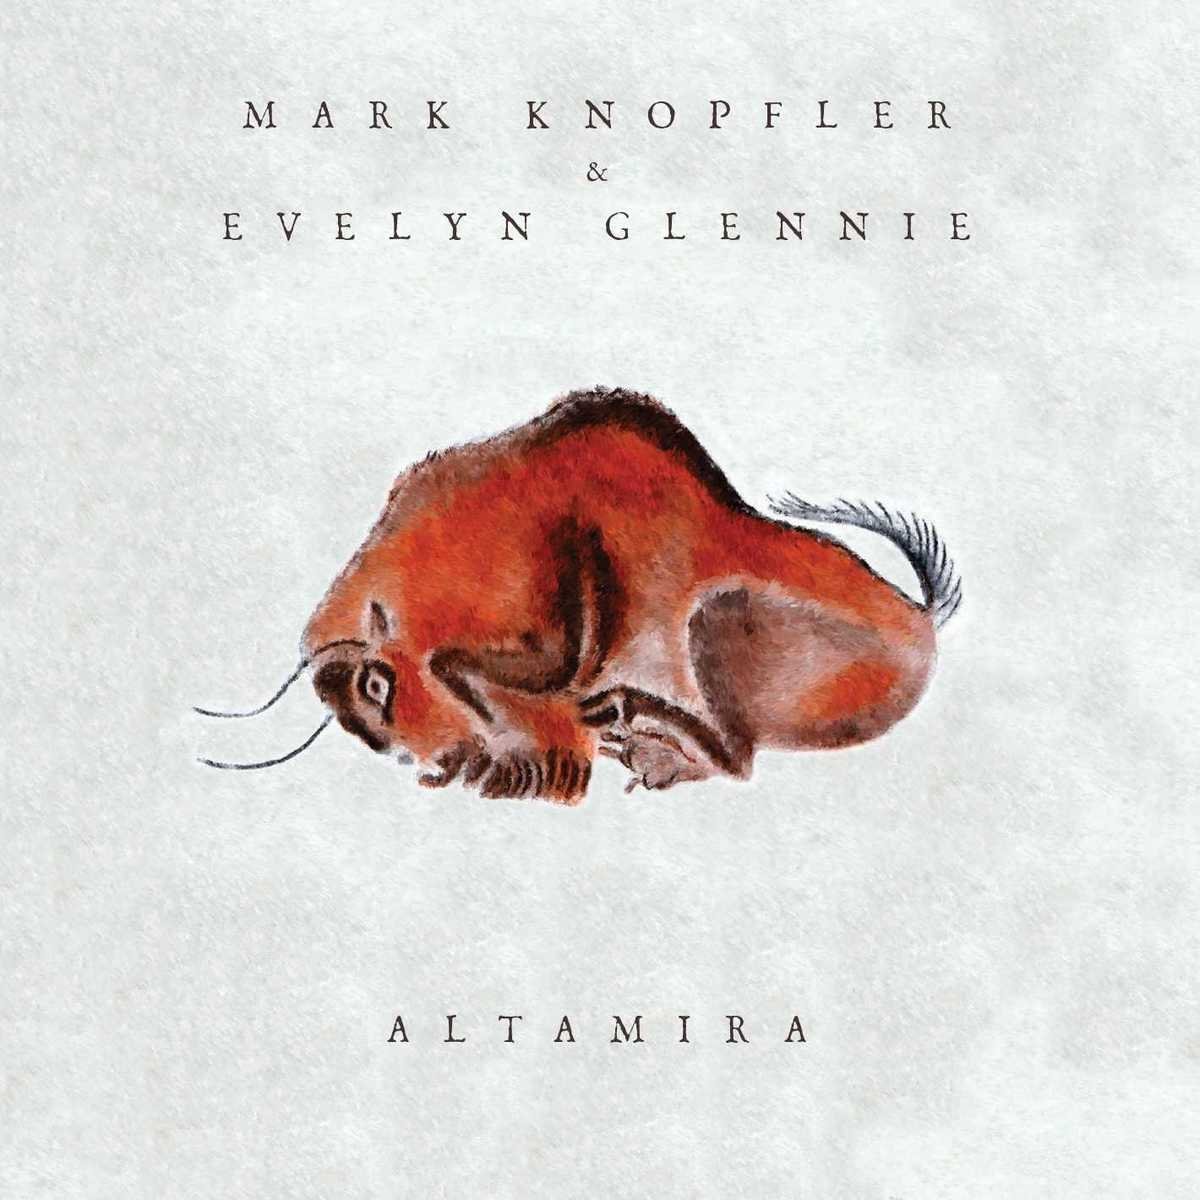 Mark Knopfler & Evelyn Glennie - Altamira (2016) [AcousticSounds FLAC 24bit/96kHz]